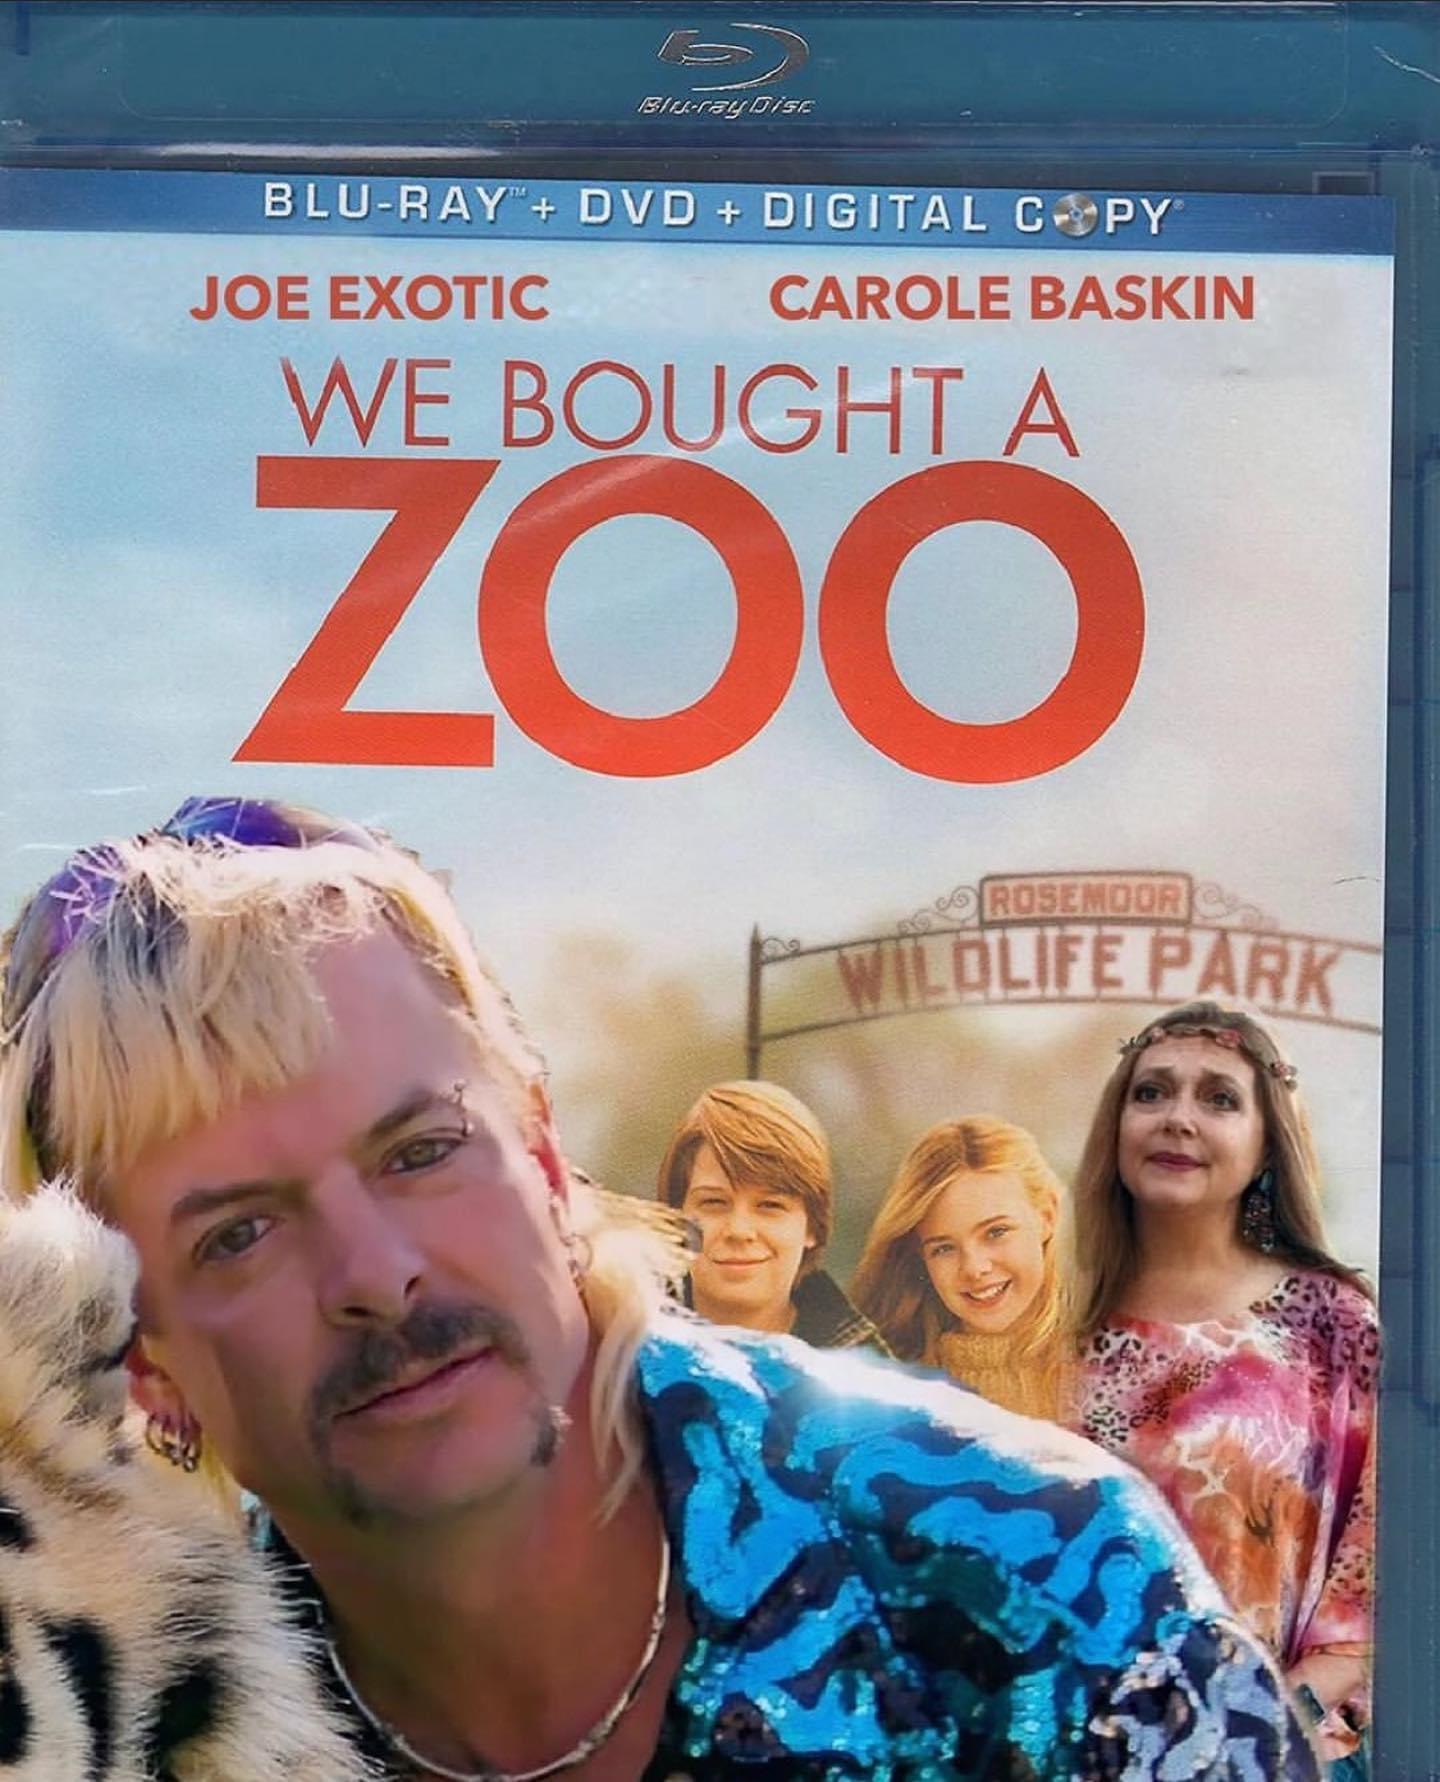 poster - Bittey Disc BluRay" Dvd Digital CPy Joe Exotic Carole Baskin We Bought A Zoo Rosemoor Lolife Park